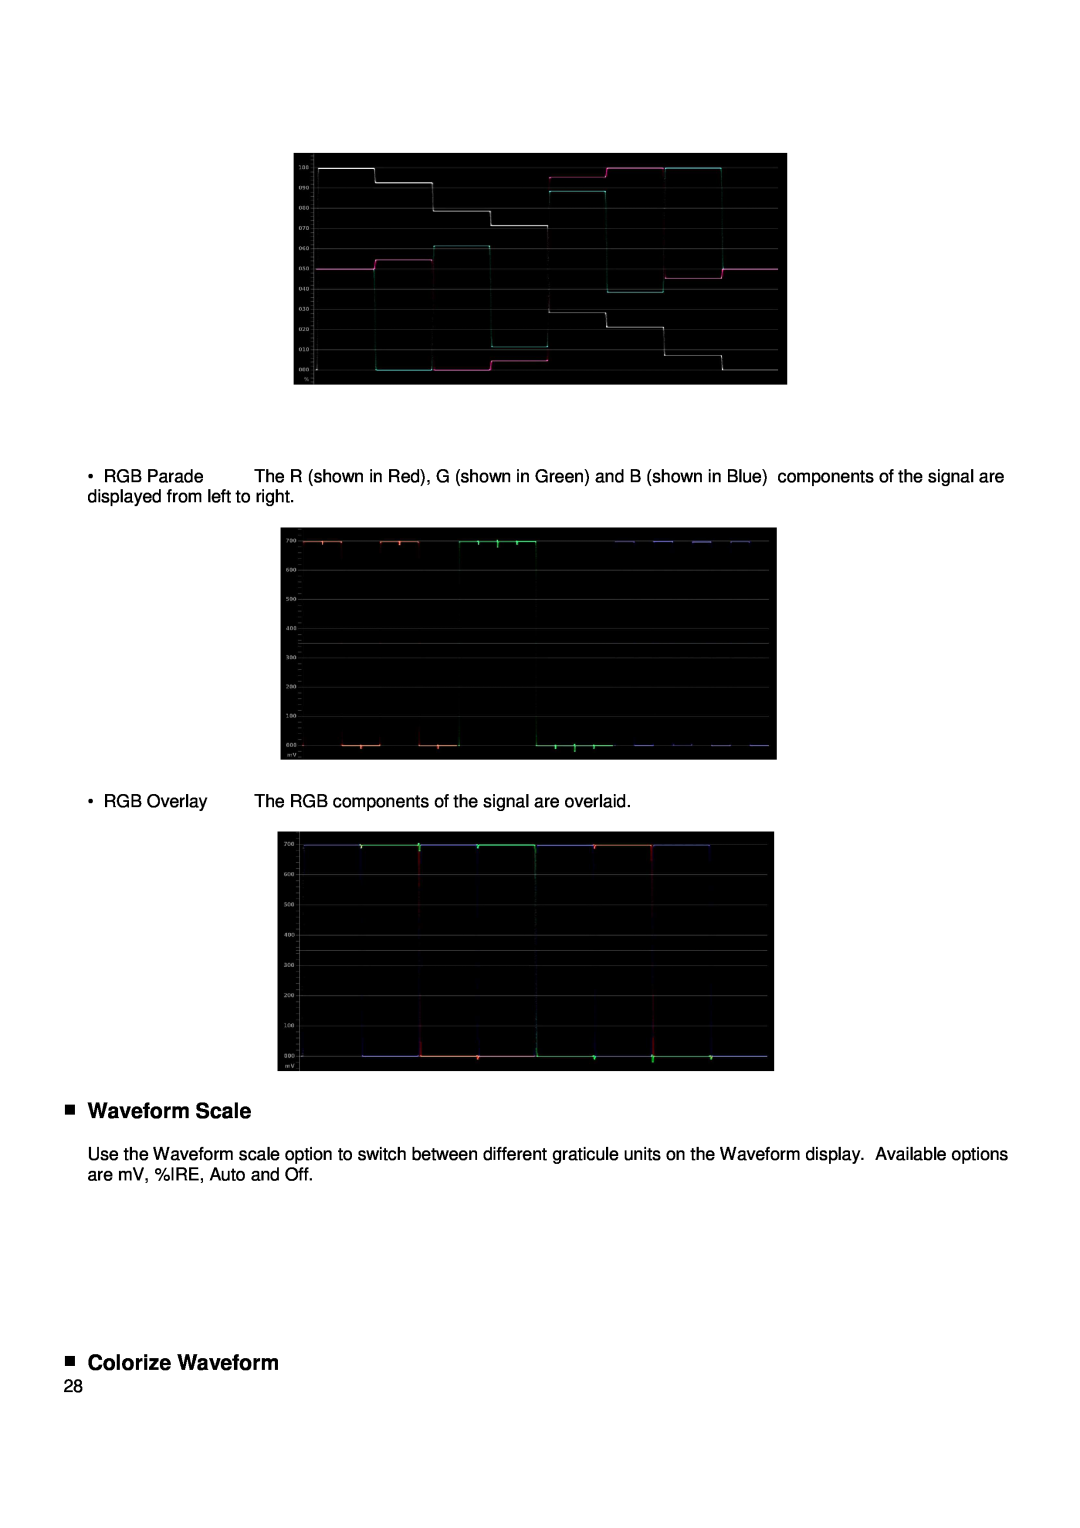 Marshall electronic V-R241-DLW manual Waveform Scale, Colorize Waveform, RGB Overlay 